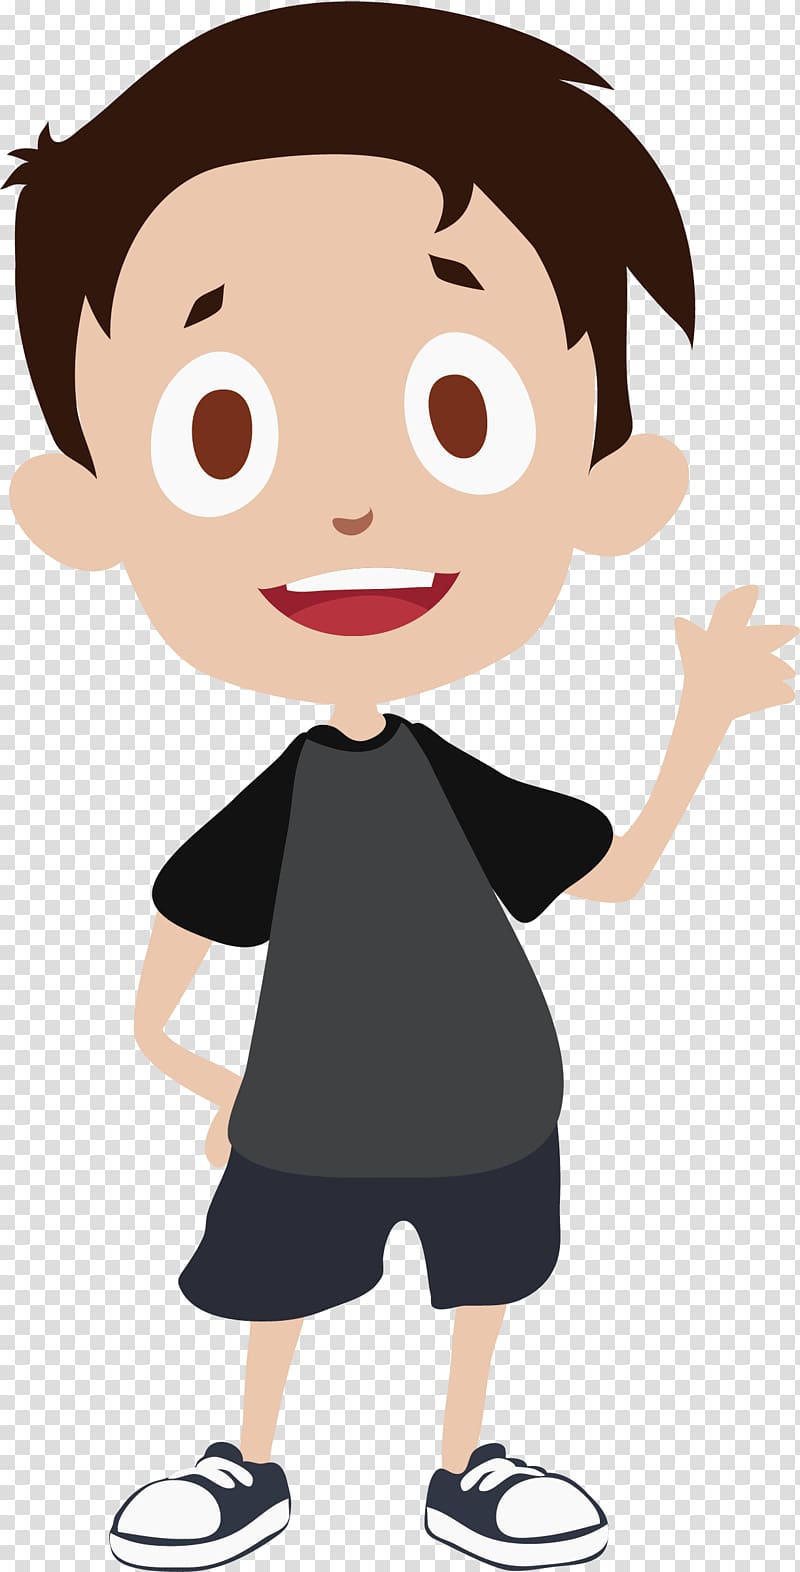 Boy character illustration.